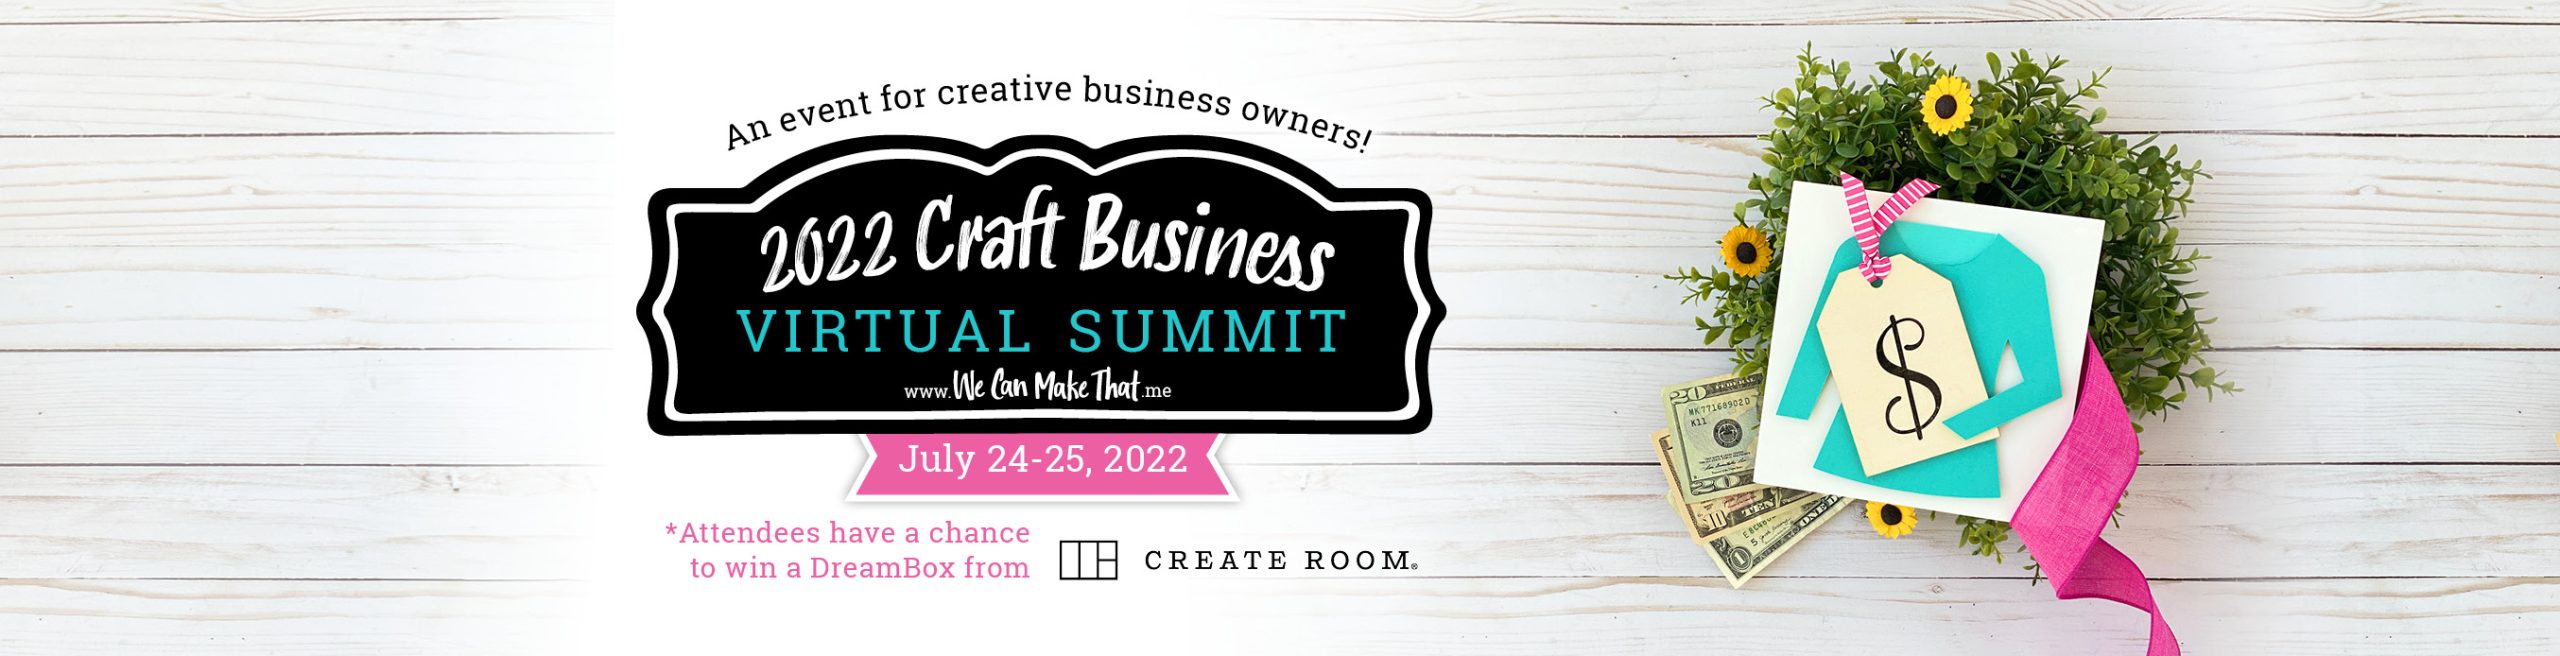 Craft Business Summit 2022